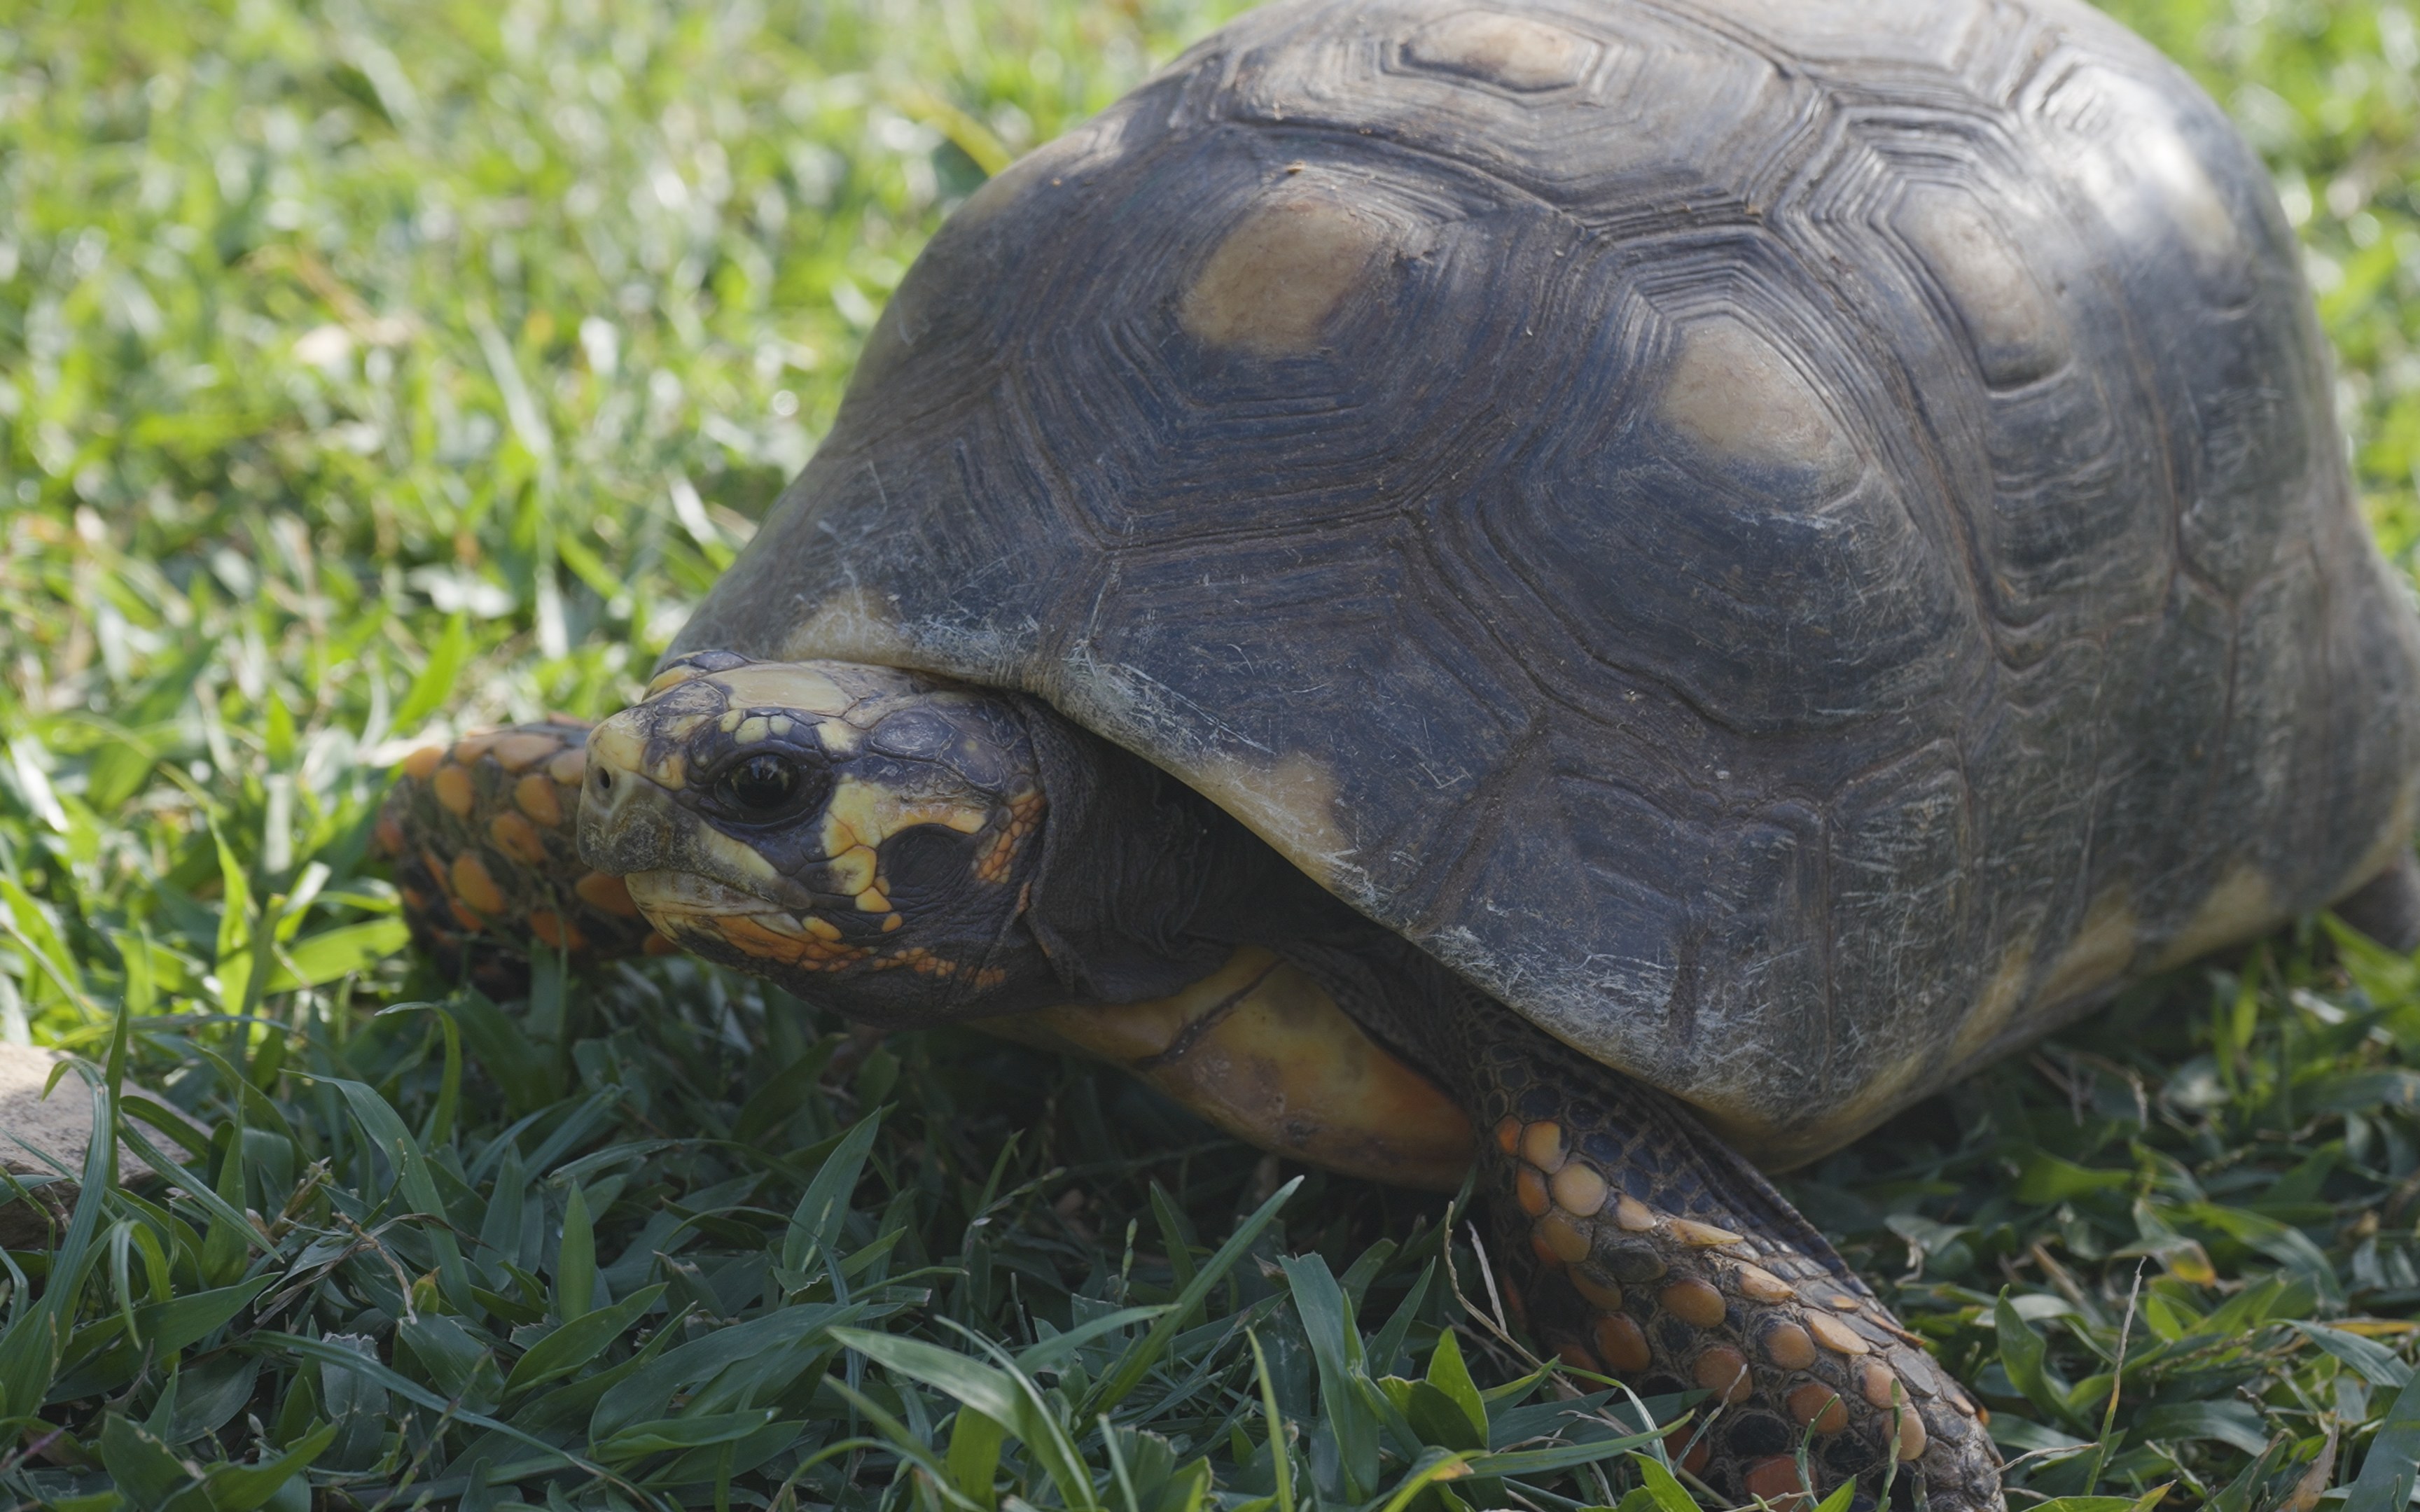 An image of a tortoise on Necker Island